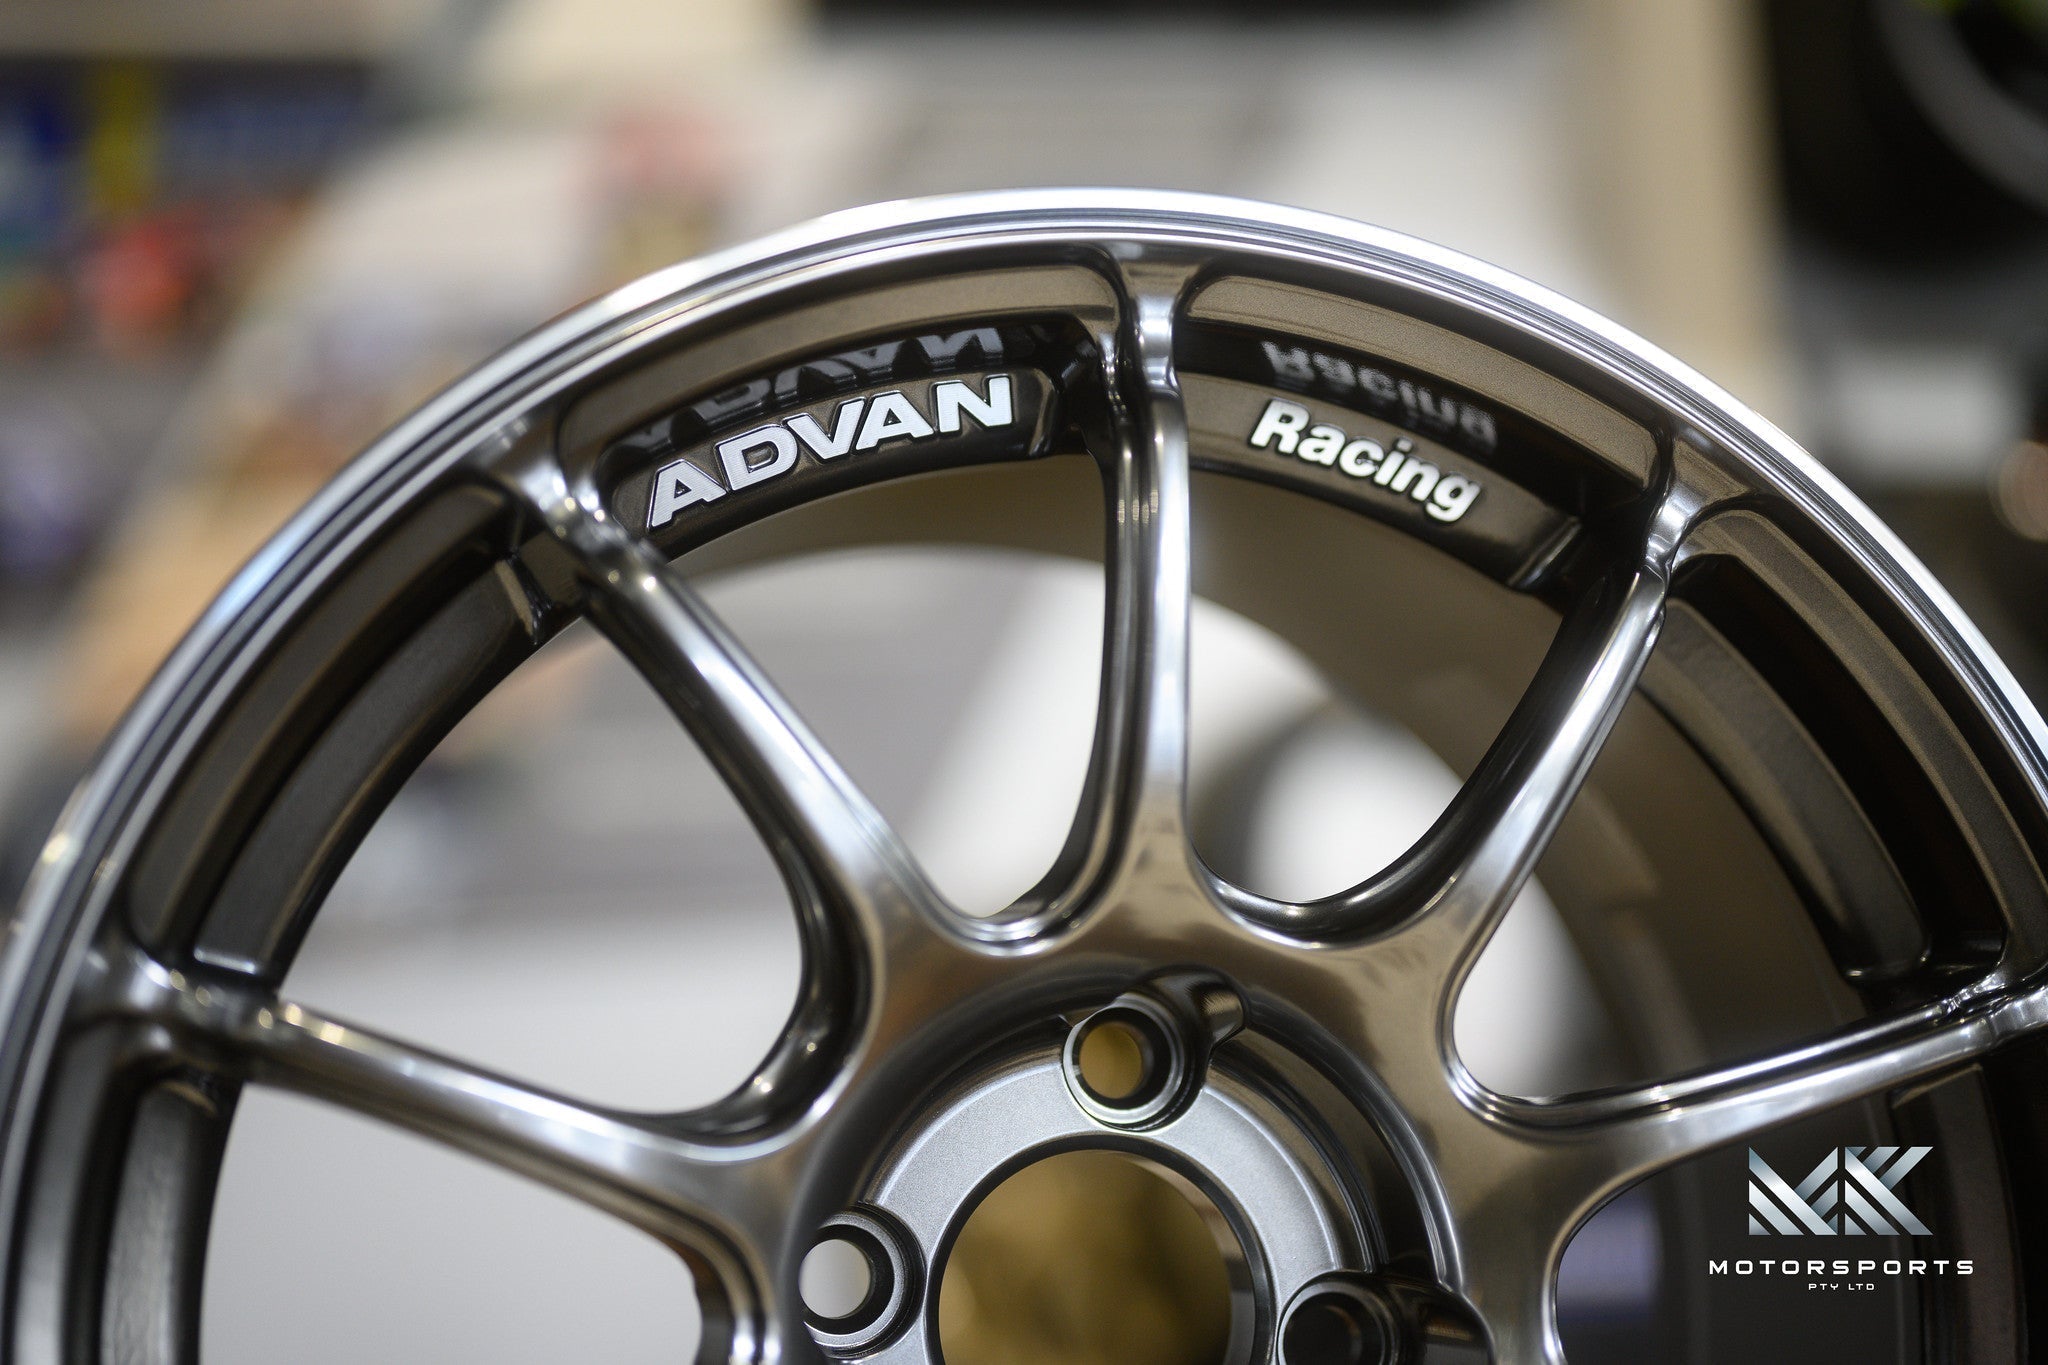 Advan Racing RZ II - Premium Wheels from Advan Racing - From just $2390.00! Shop now at MK MOTORSPORTS